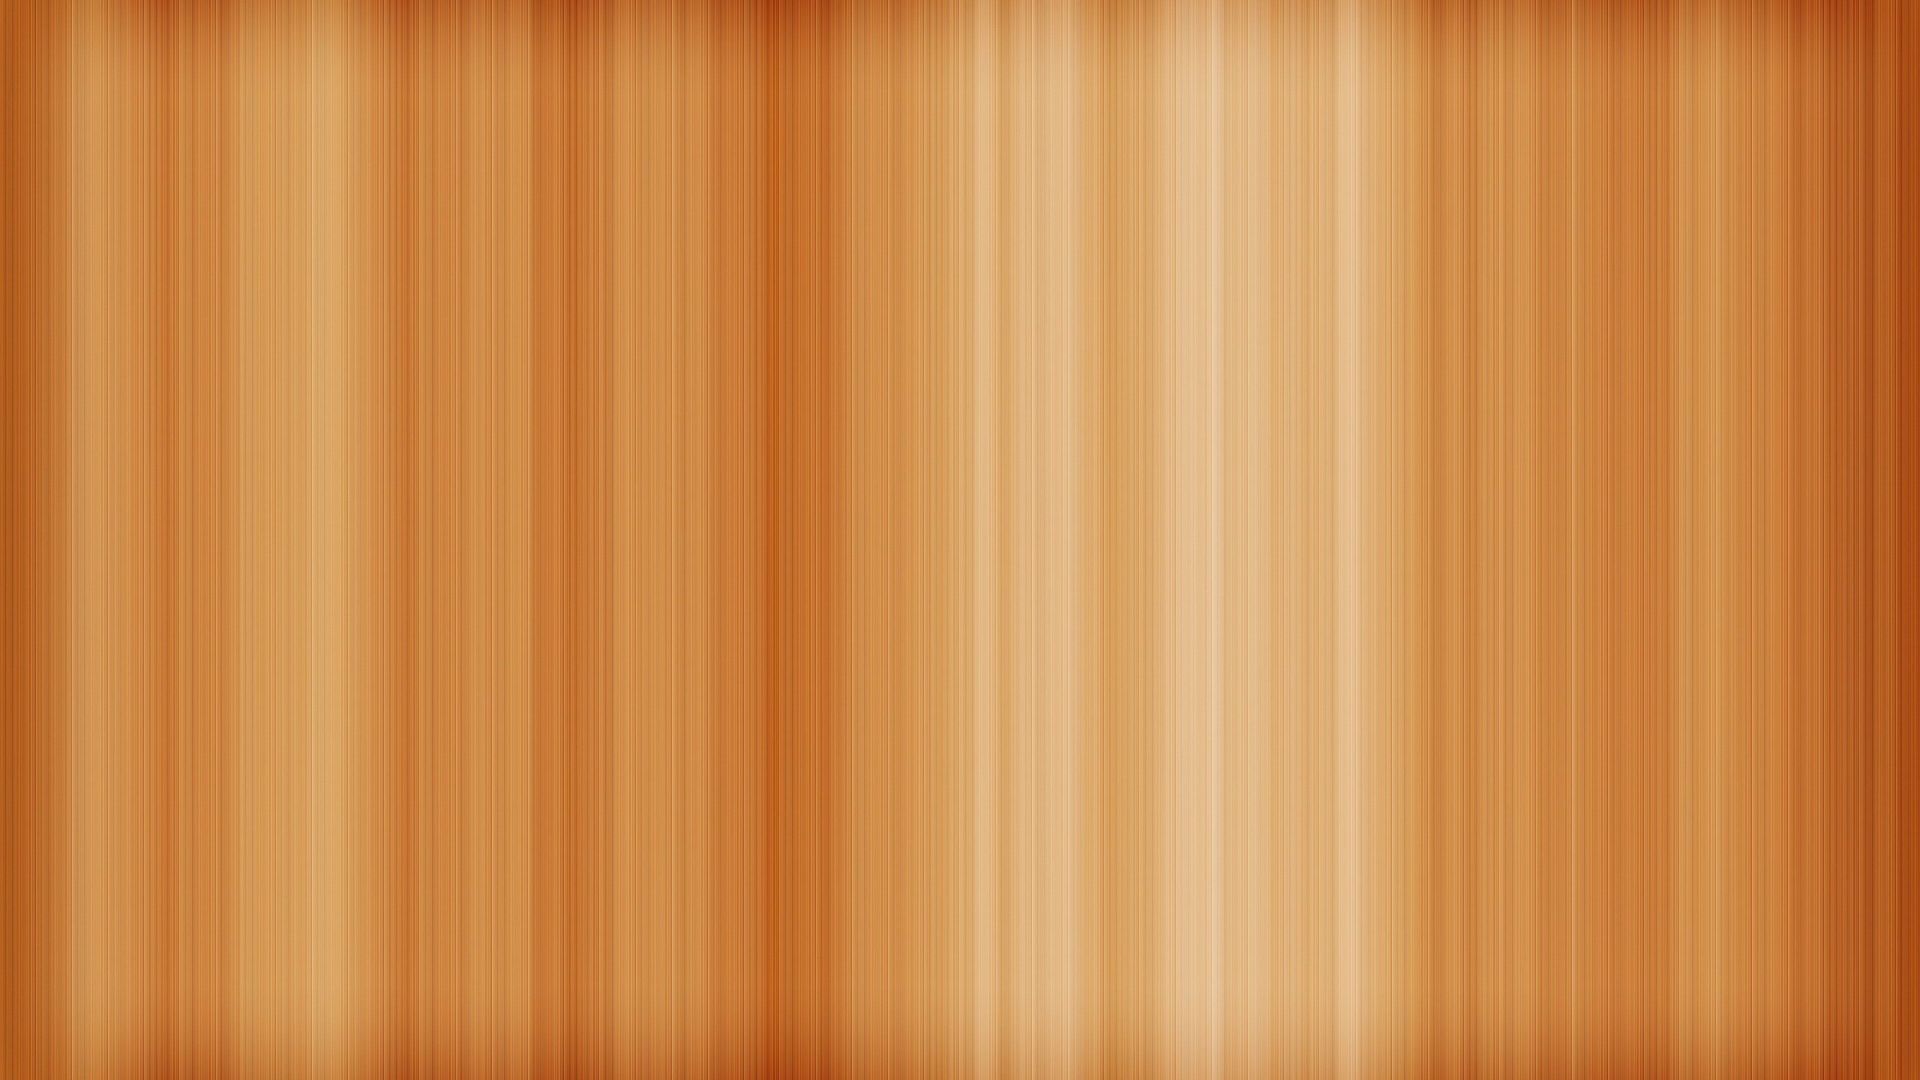 Light Wood Background 5.